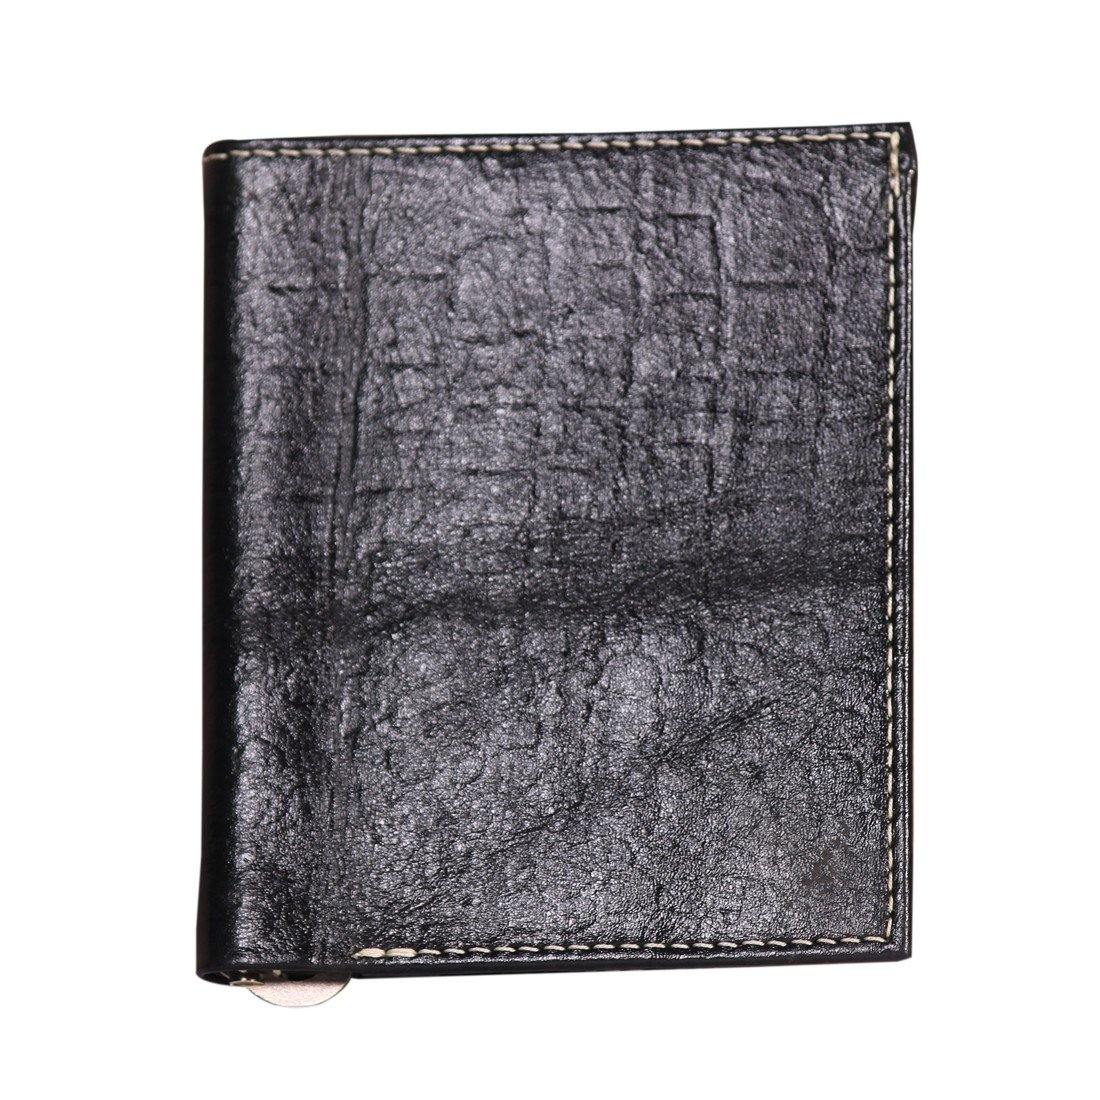 Leather World Trendy Black & Tan Color Genuine Leather Bi Fold Money Clip Wallet For Men - #MC9001 - Leatherworldonline.net